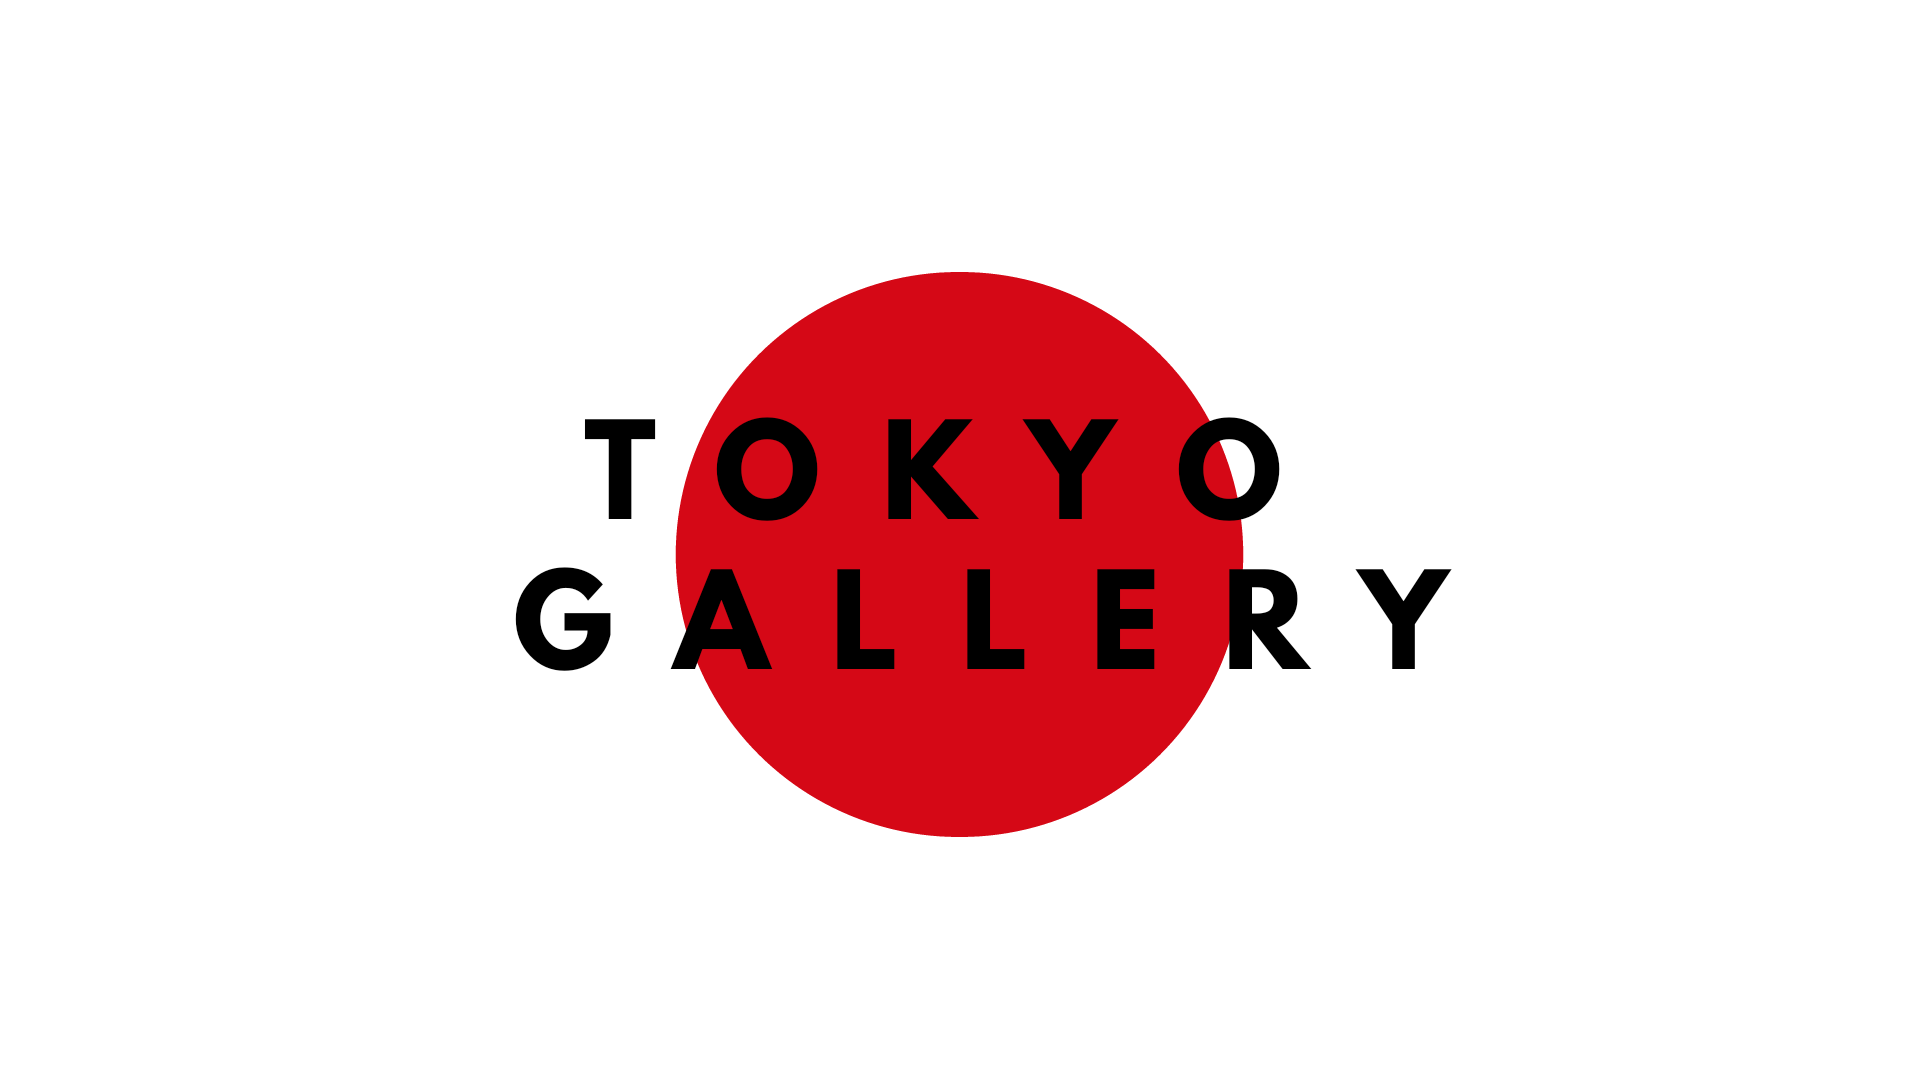 Tokyo gallery ltd shop